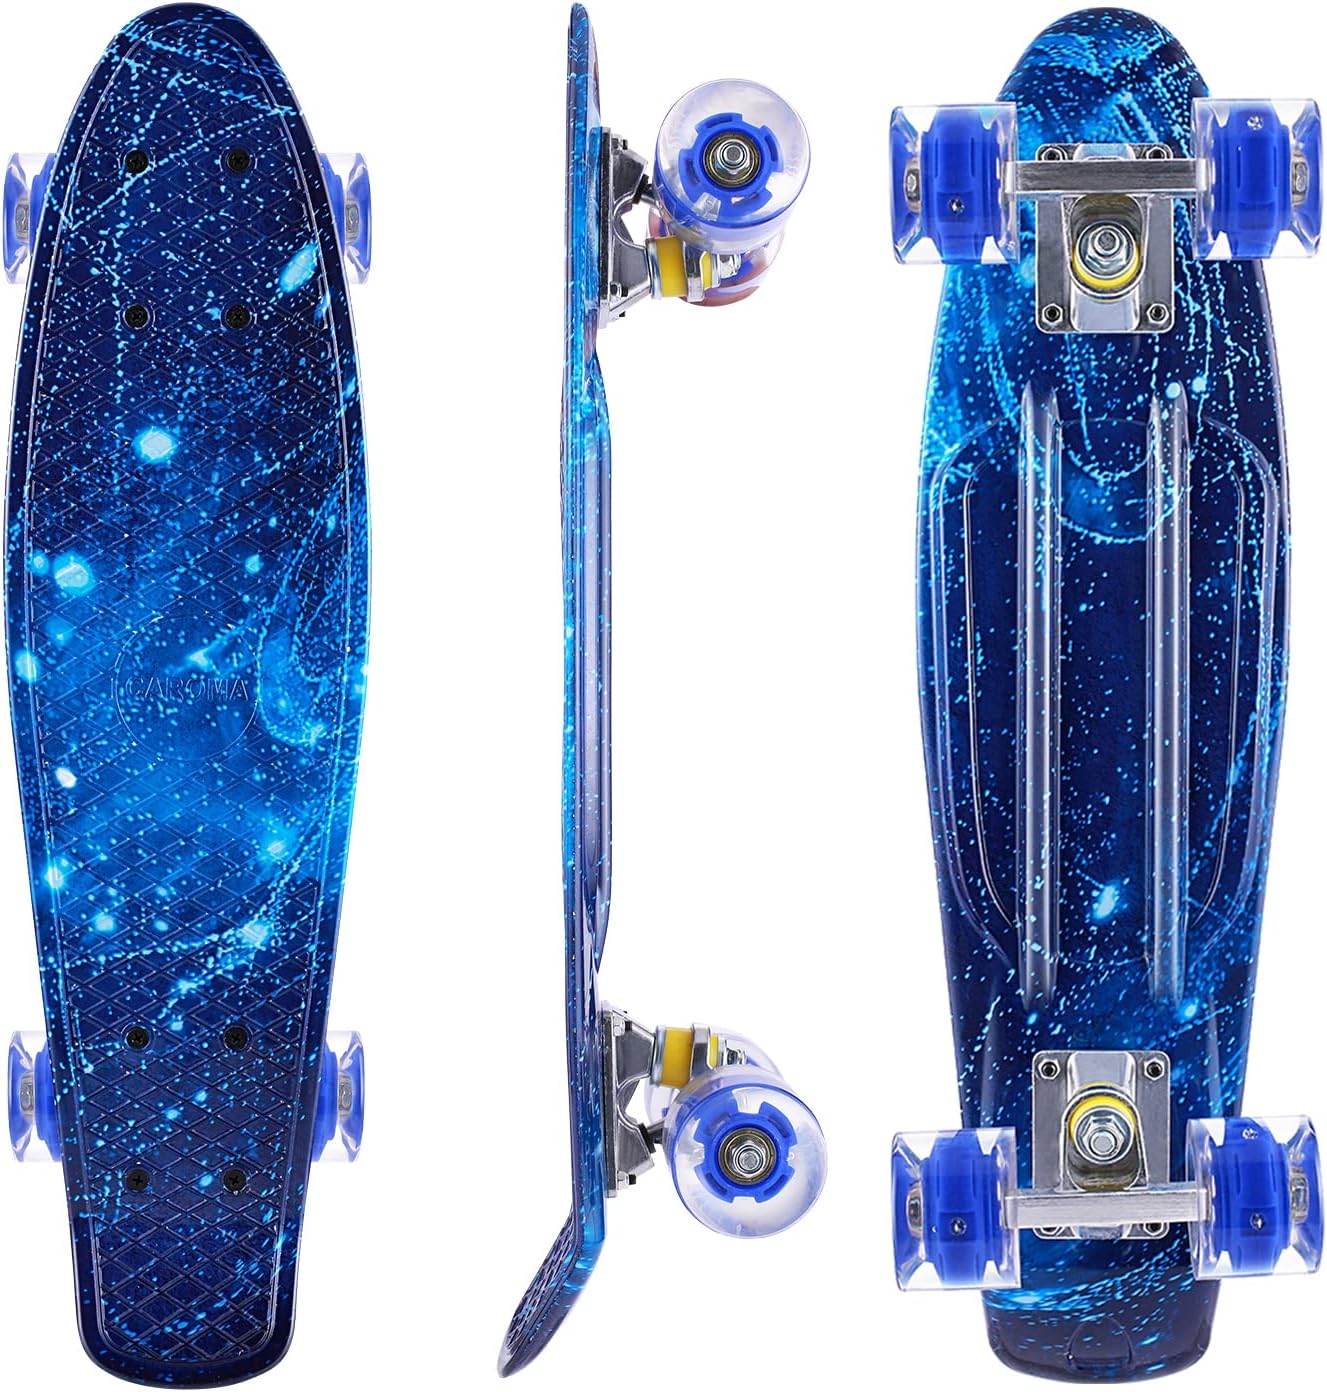 CAROMA Skateboard Enfant, Planche à roulettes avec LED Light Up Roues, Skateboard 22 Pouces Mini Cruiser Skateboard Fille Garçon Débutant - fitnessterapy